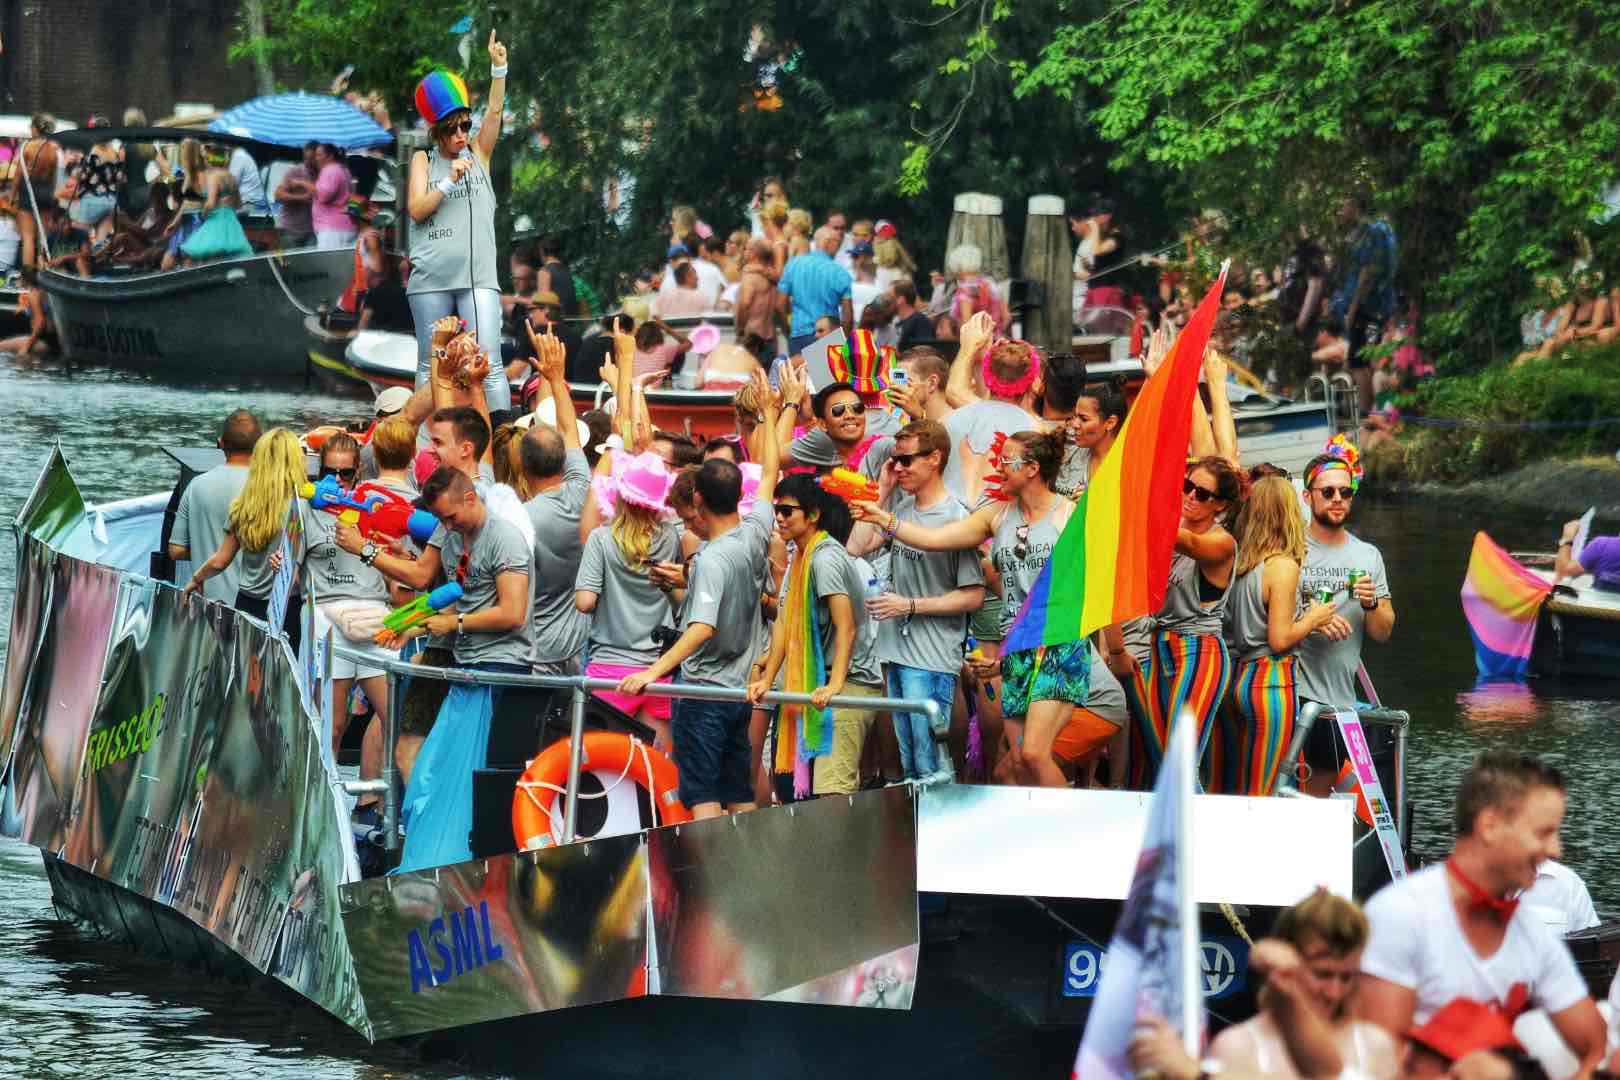 Pride in Amsterdam